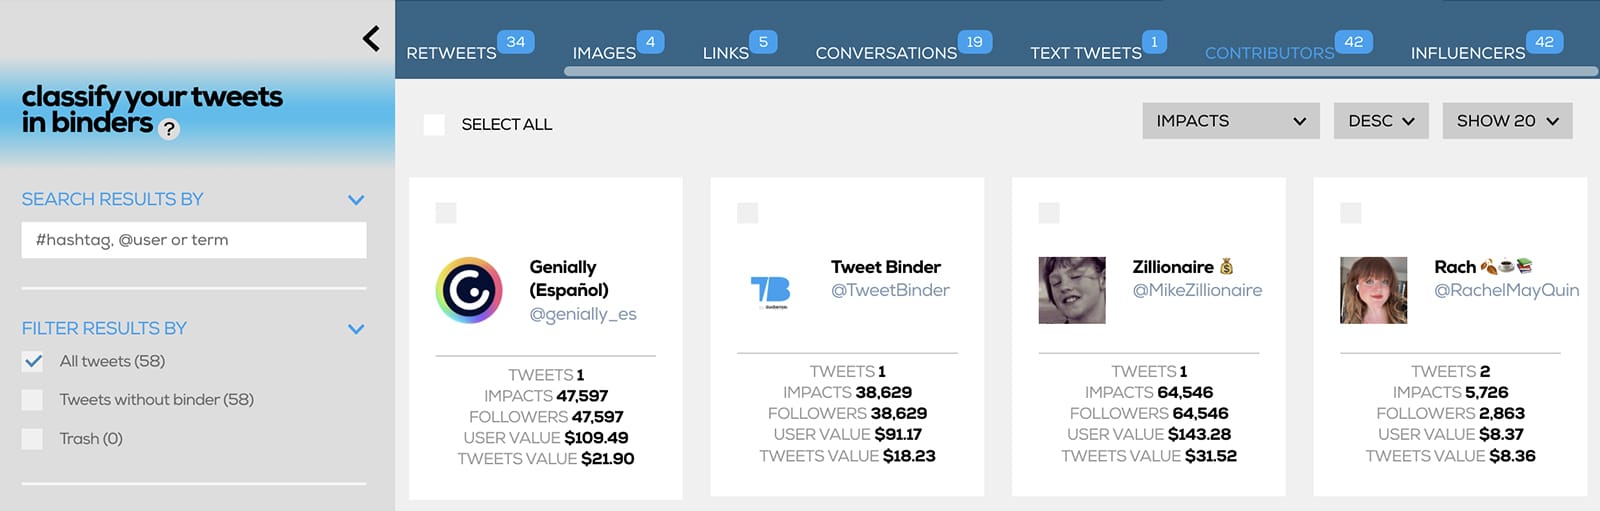 Tweet Binder - Twitter competitor analytics tool